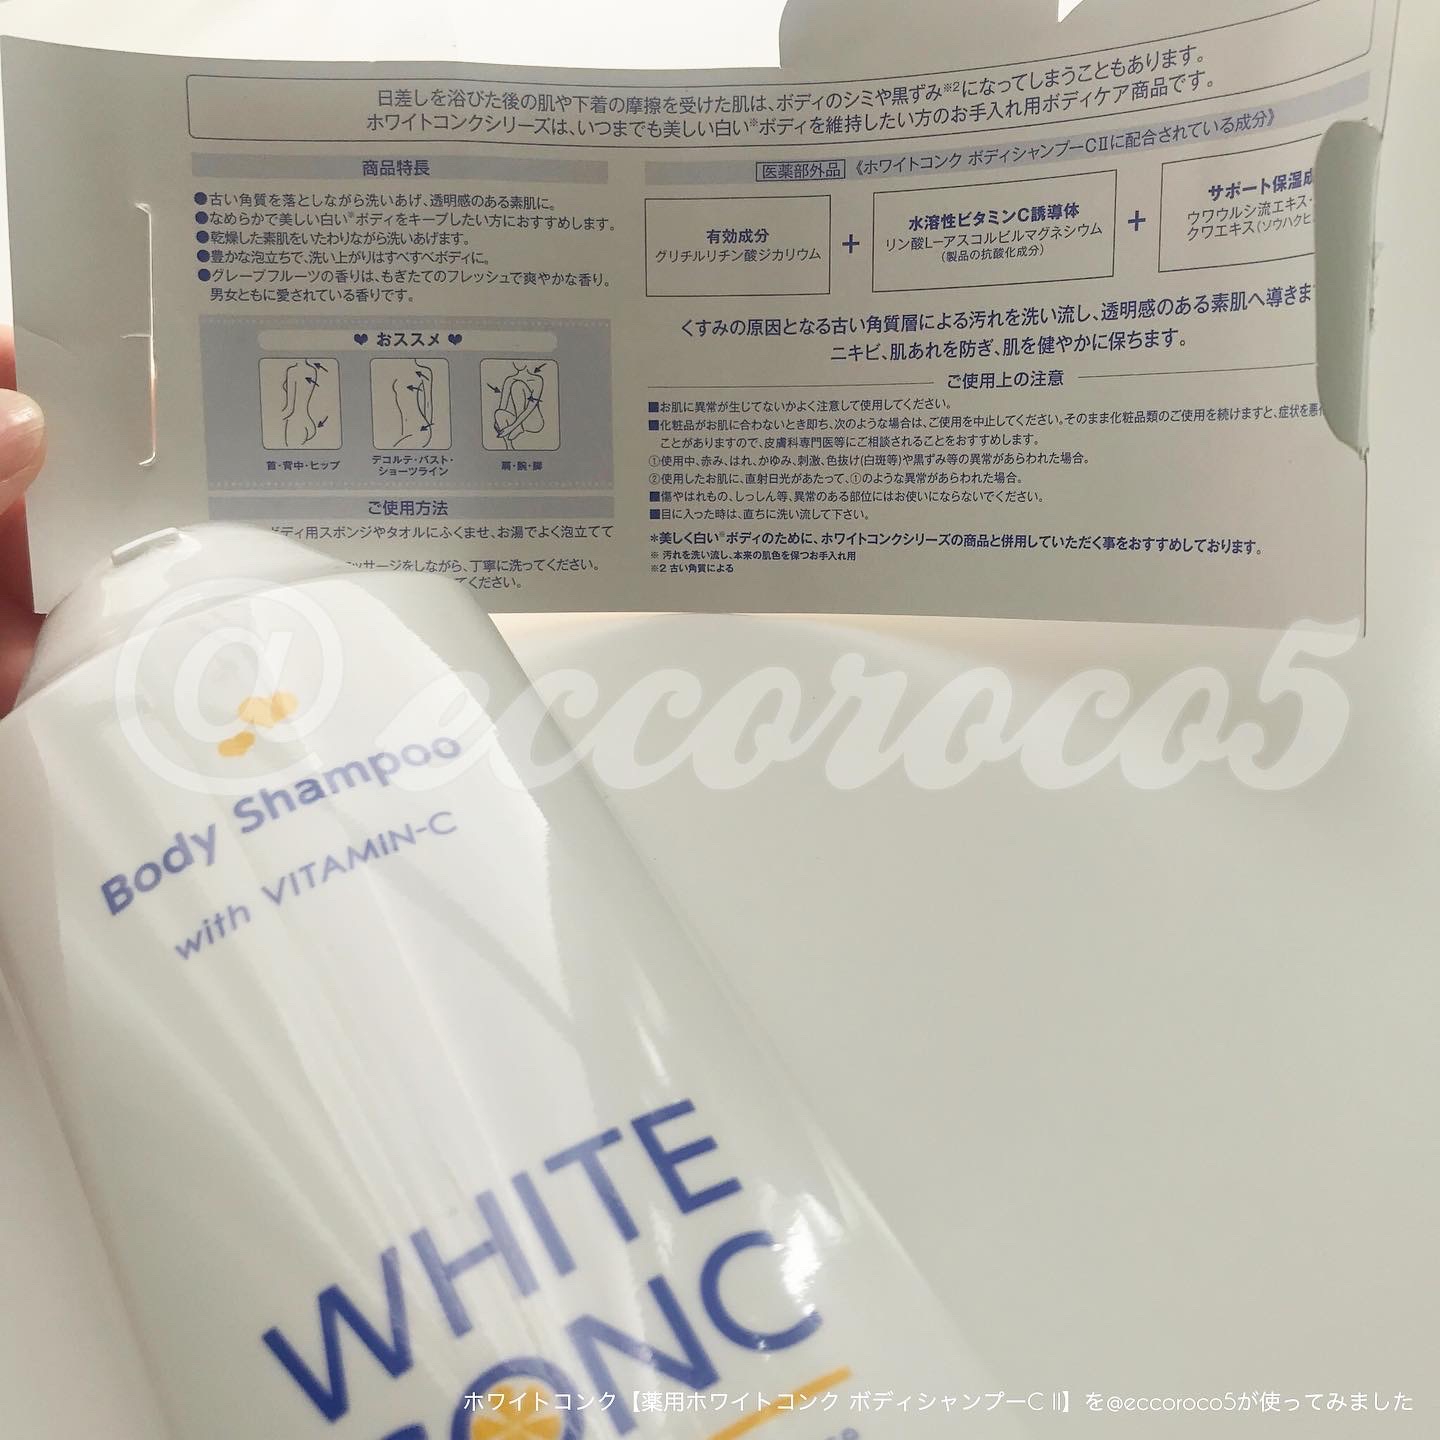 white conc(ホワイトコンク) 薬用ホワイトコンク ボディシャンプーC IIに関する@eccoroco5さんの口コミ画像3